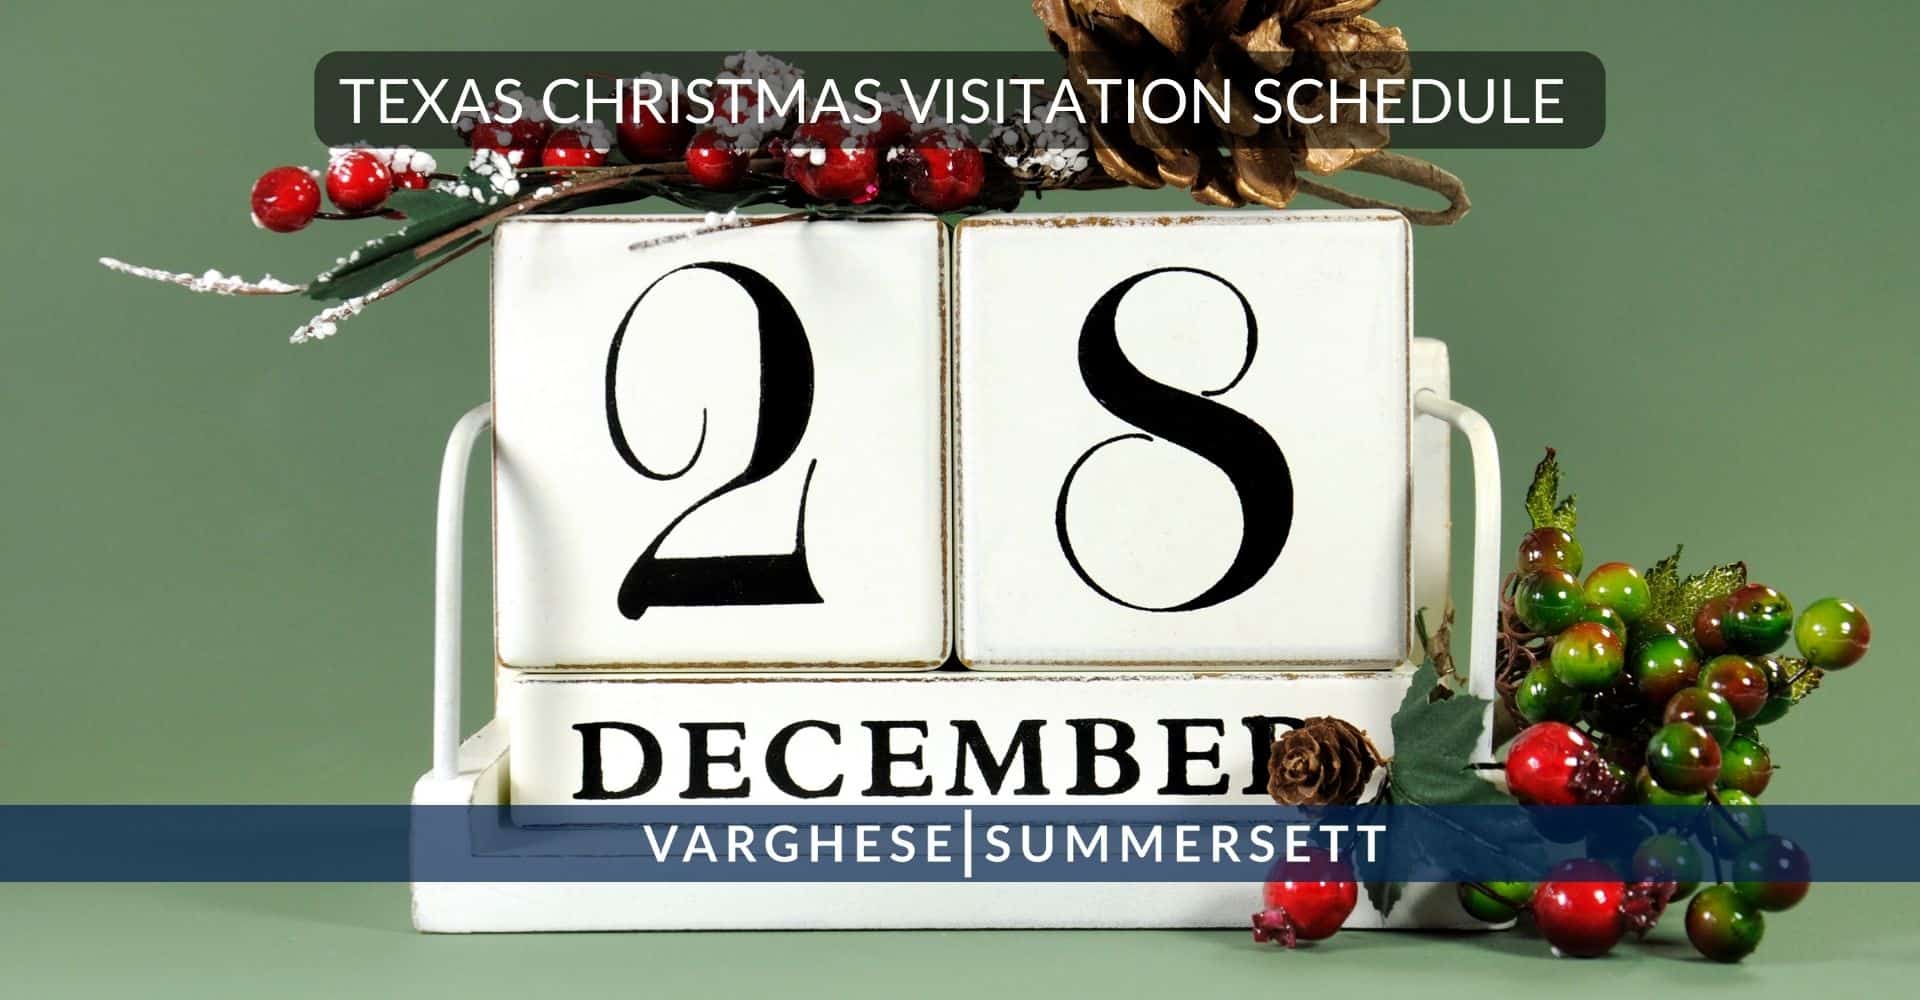 Christmas visitation schedule